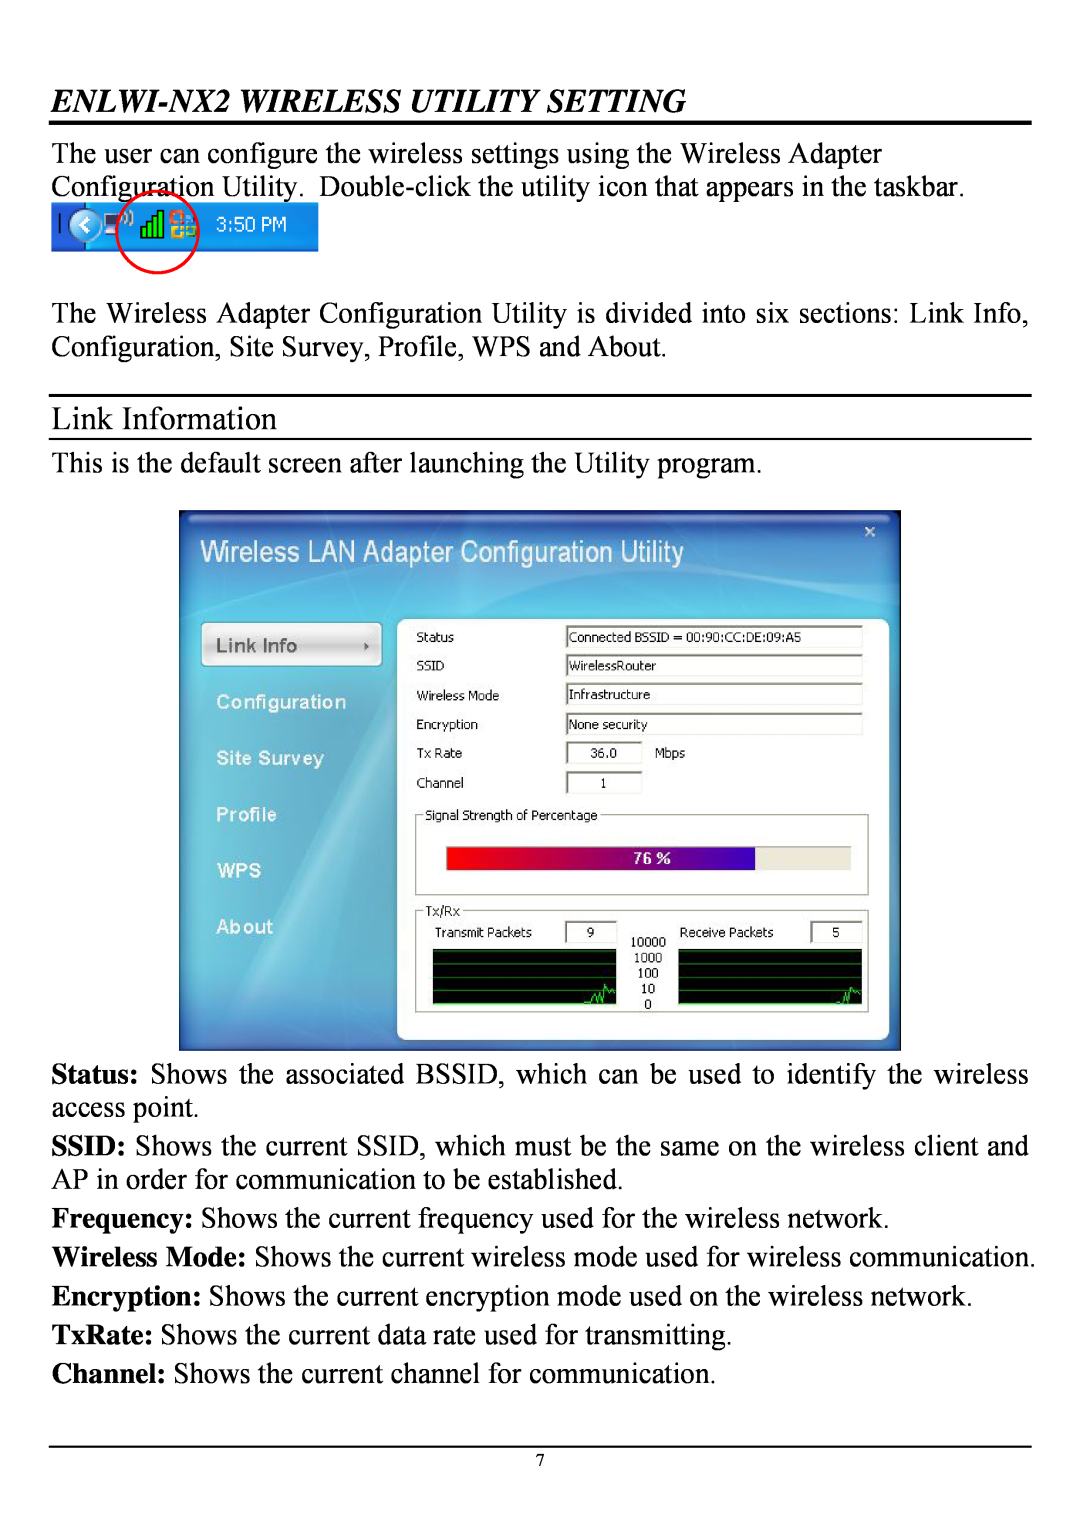 Encore electronic manual ENLWI-NX2 WIRELESS UTILITY SETTING, Link Information 